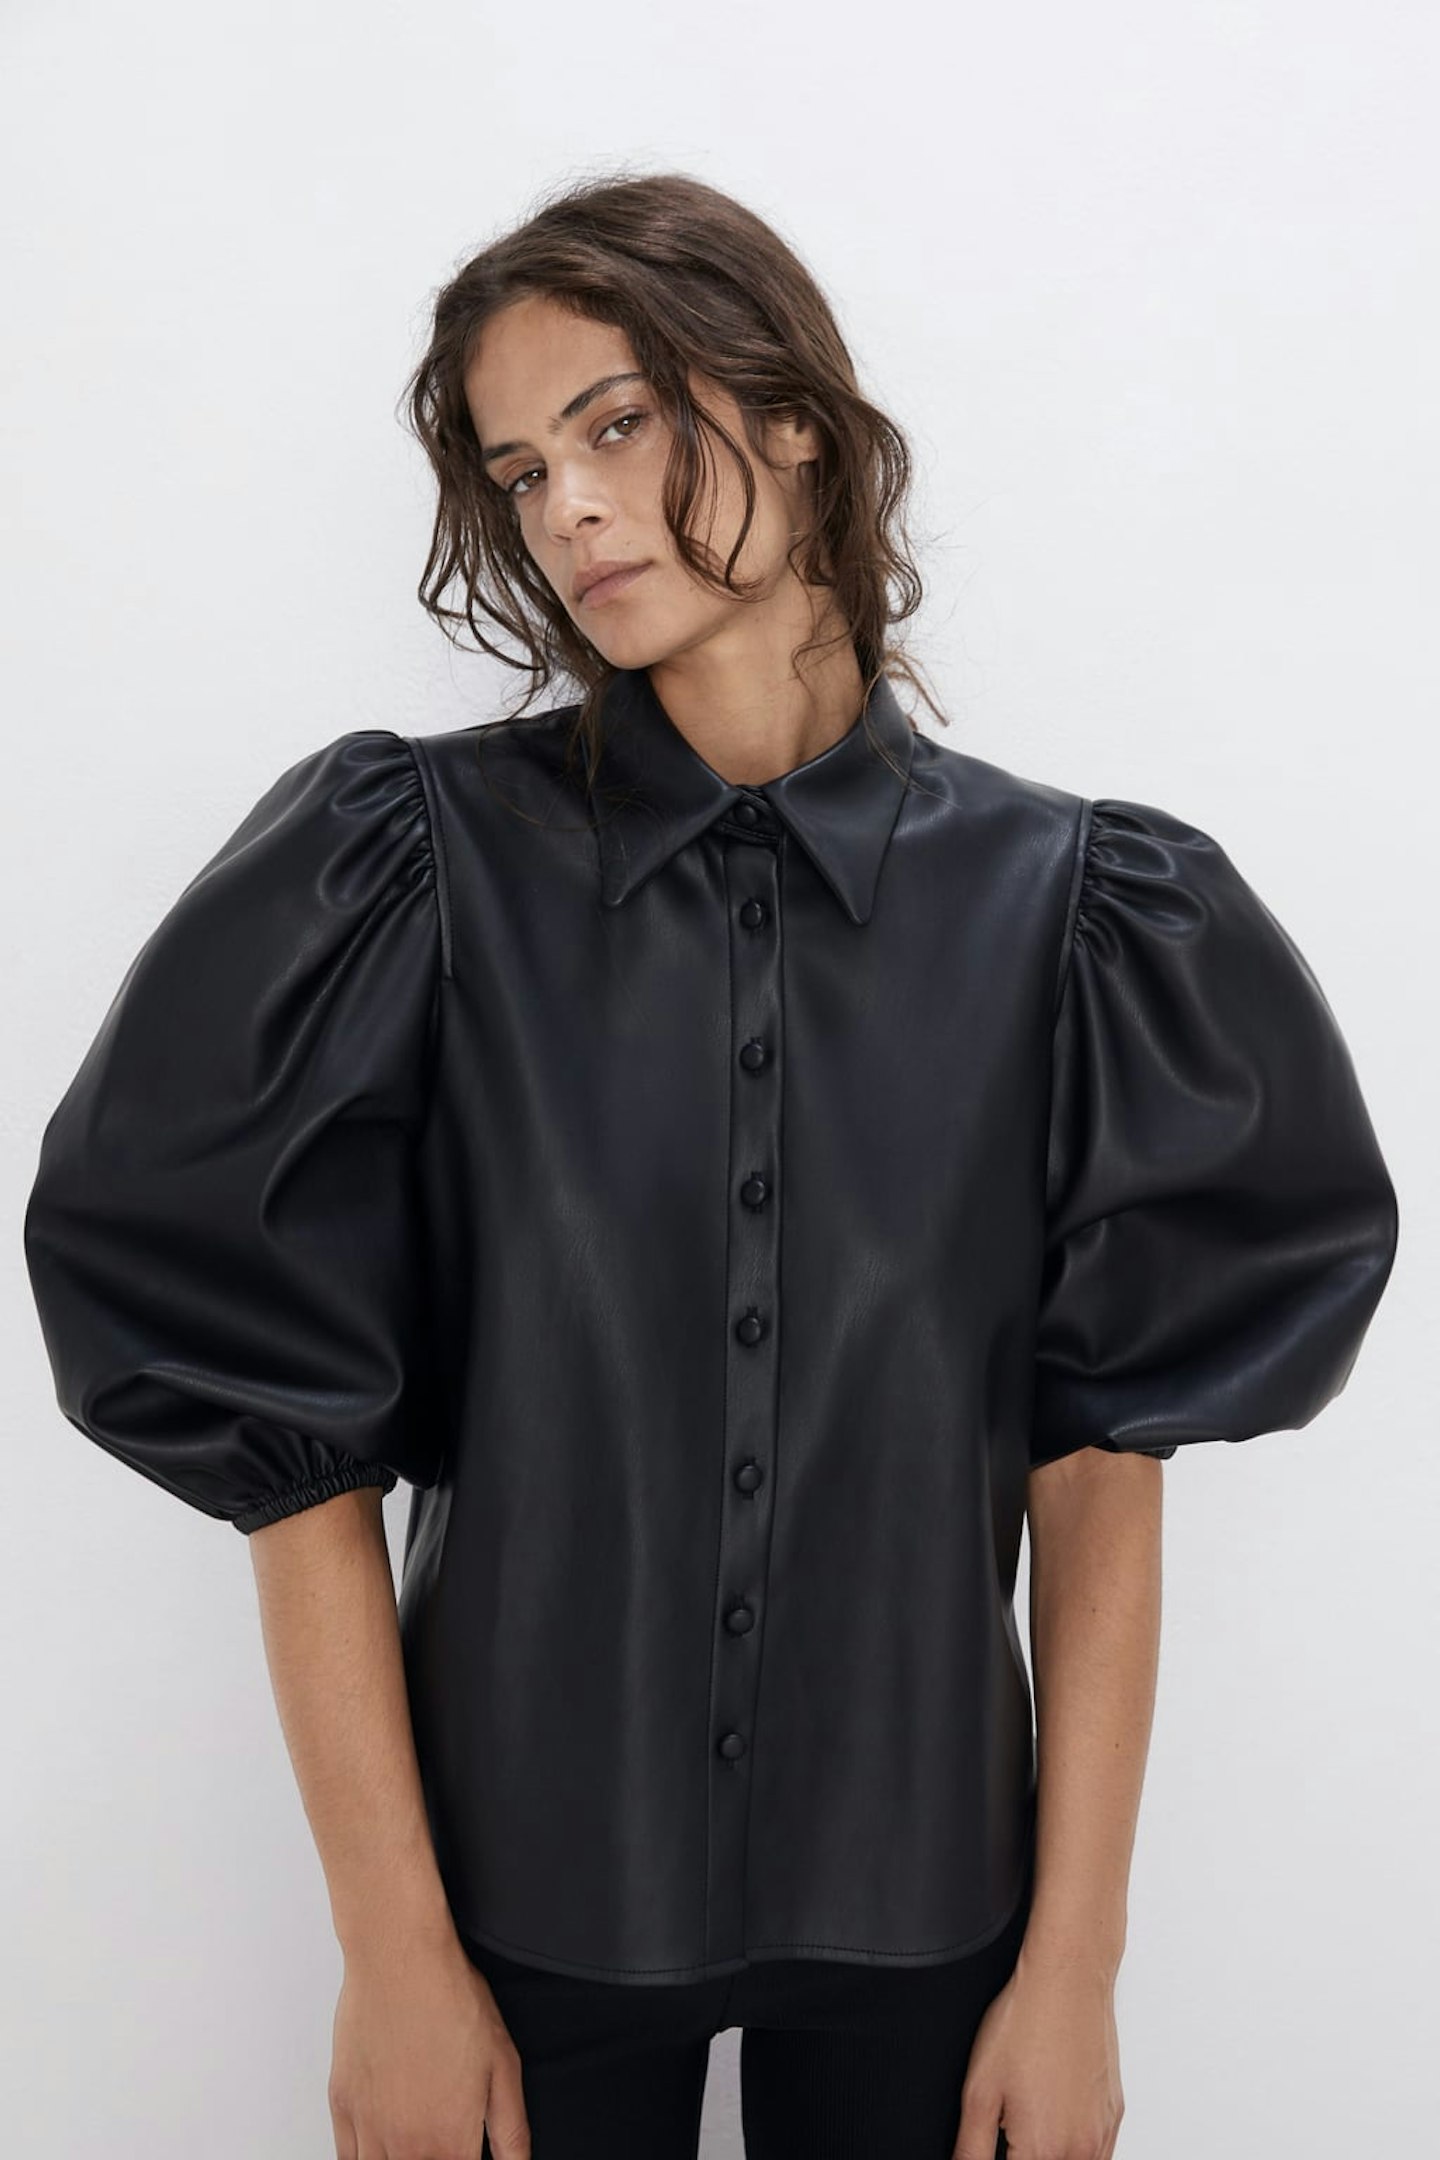 Zara, Puff Sleeve Faux Leather Shirt, £29.99